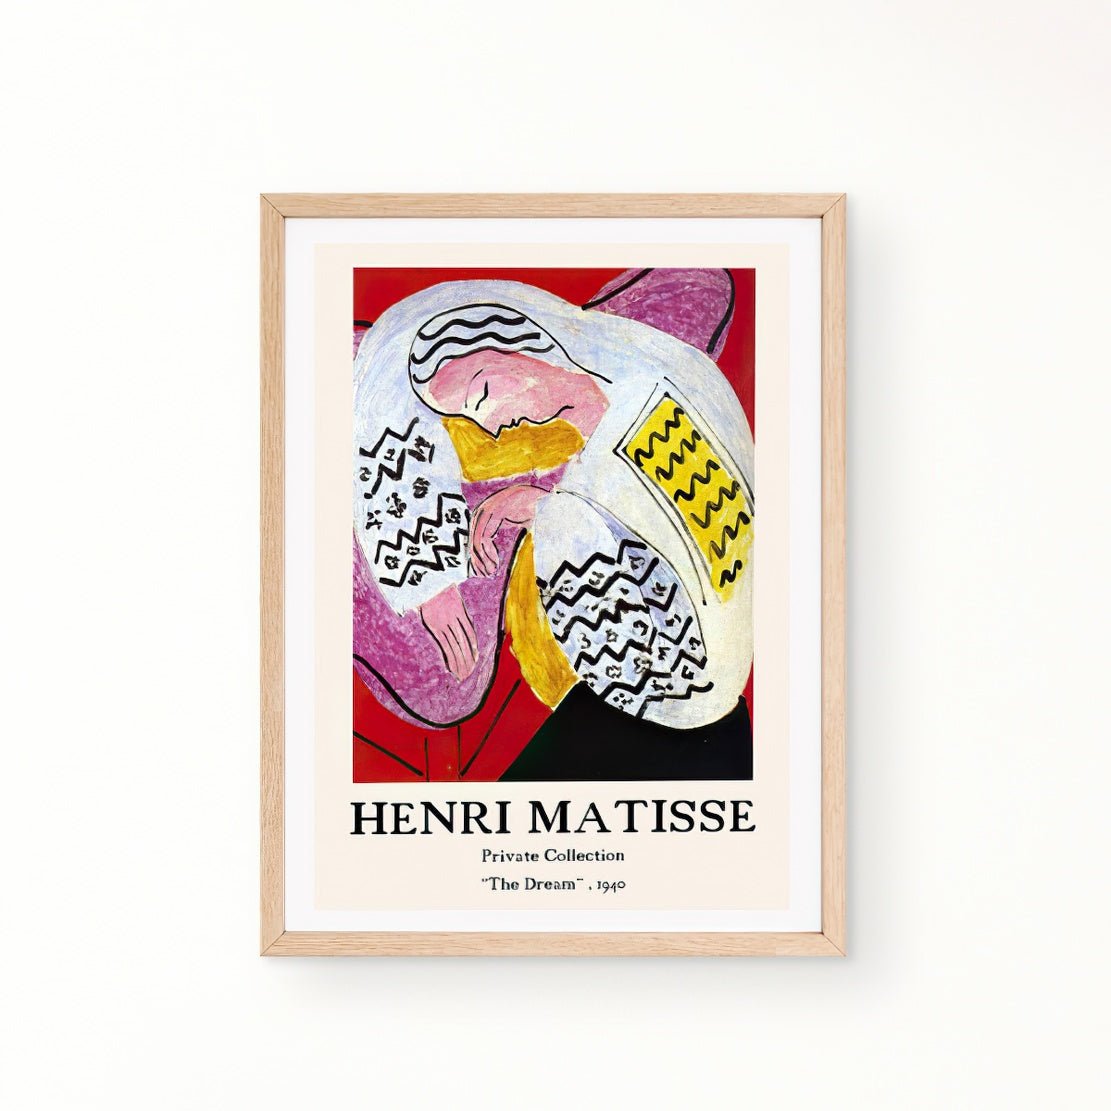 Henri Matisse "The Dream" 1940 art print poster